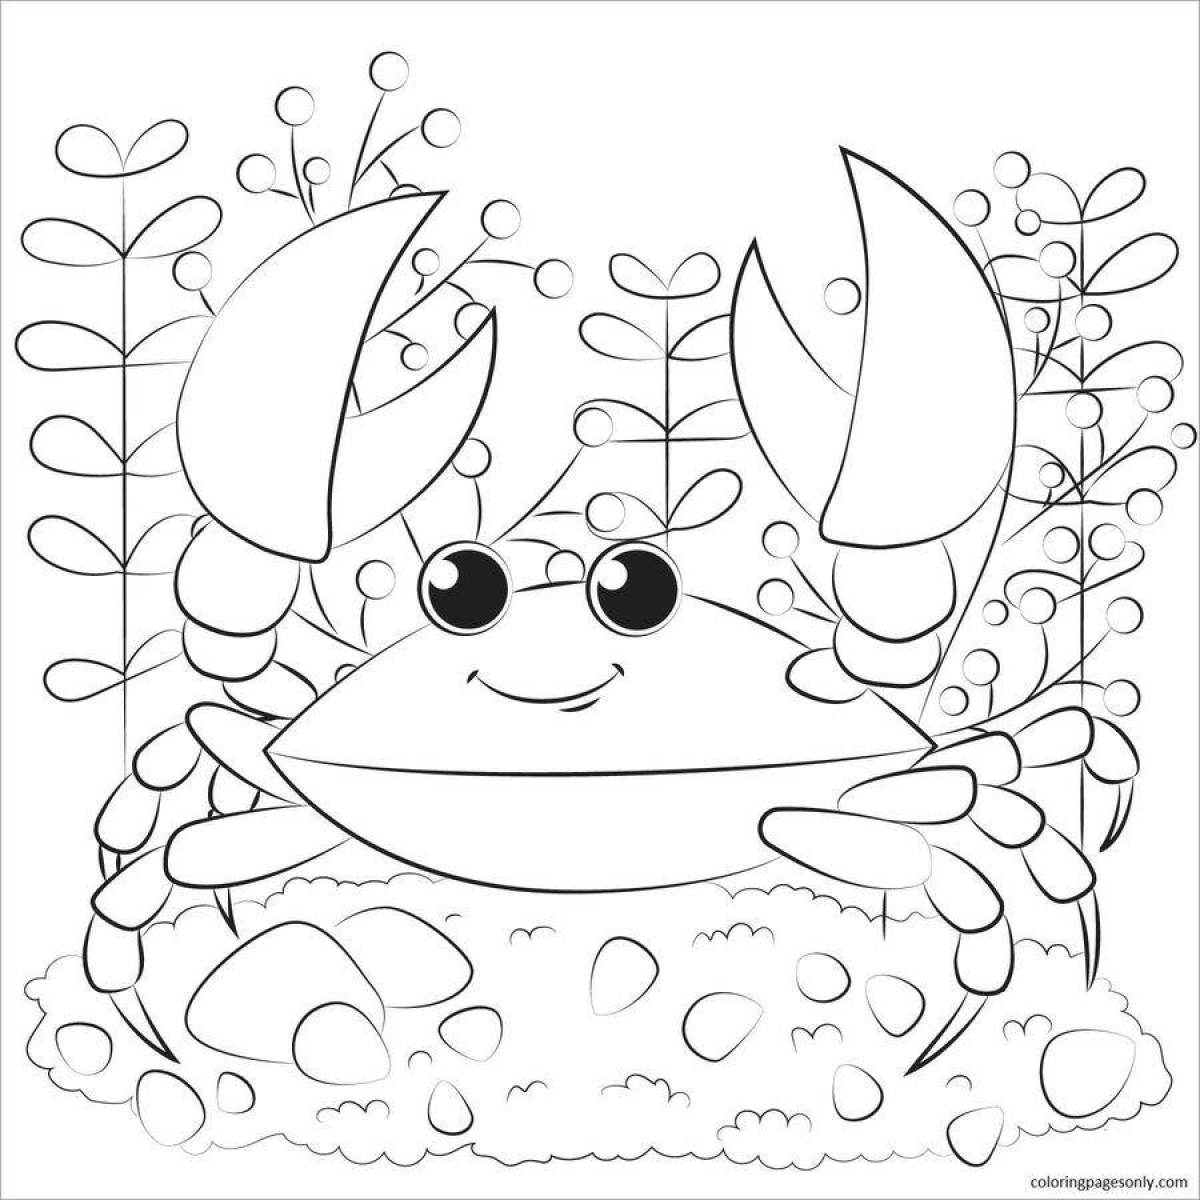 Coloring page magic captain crab